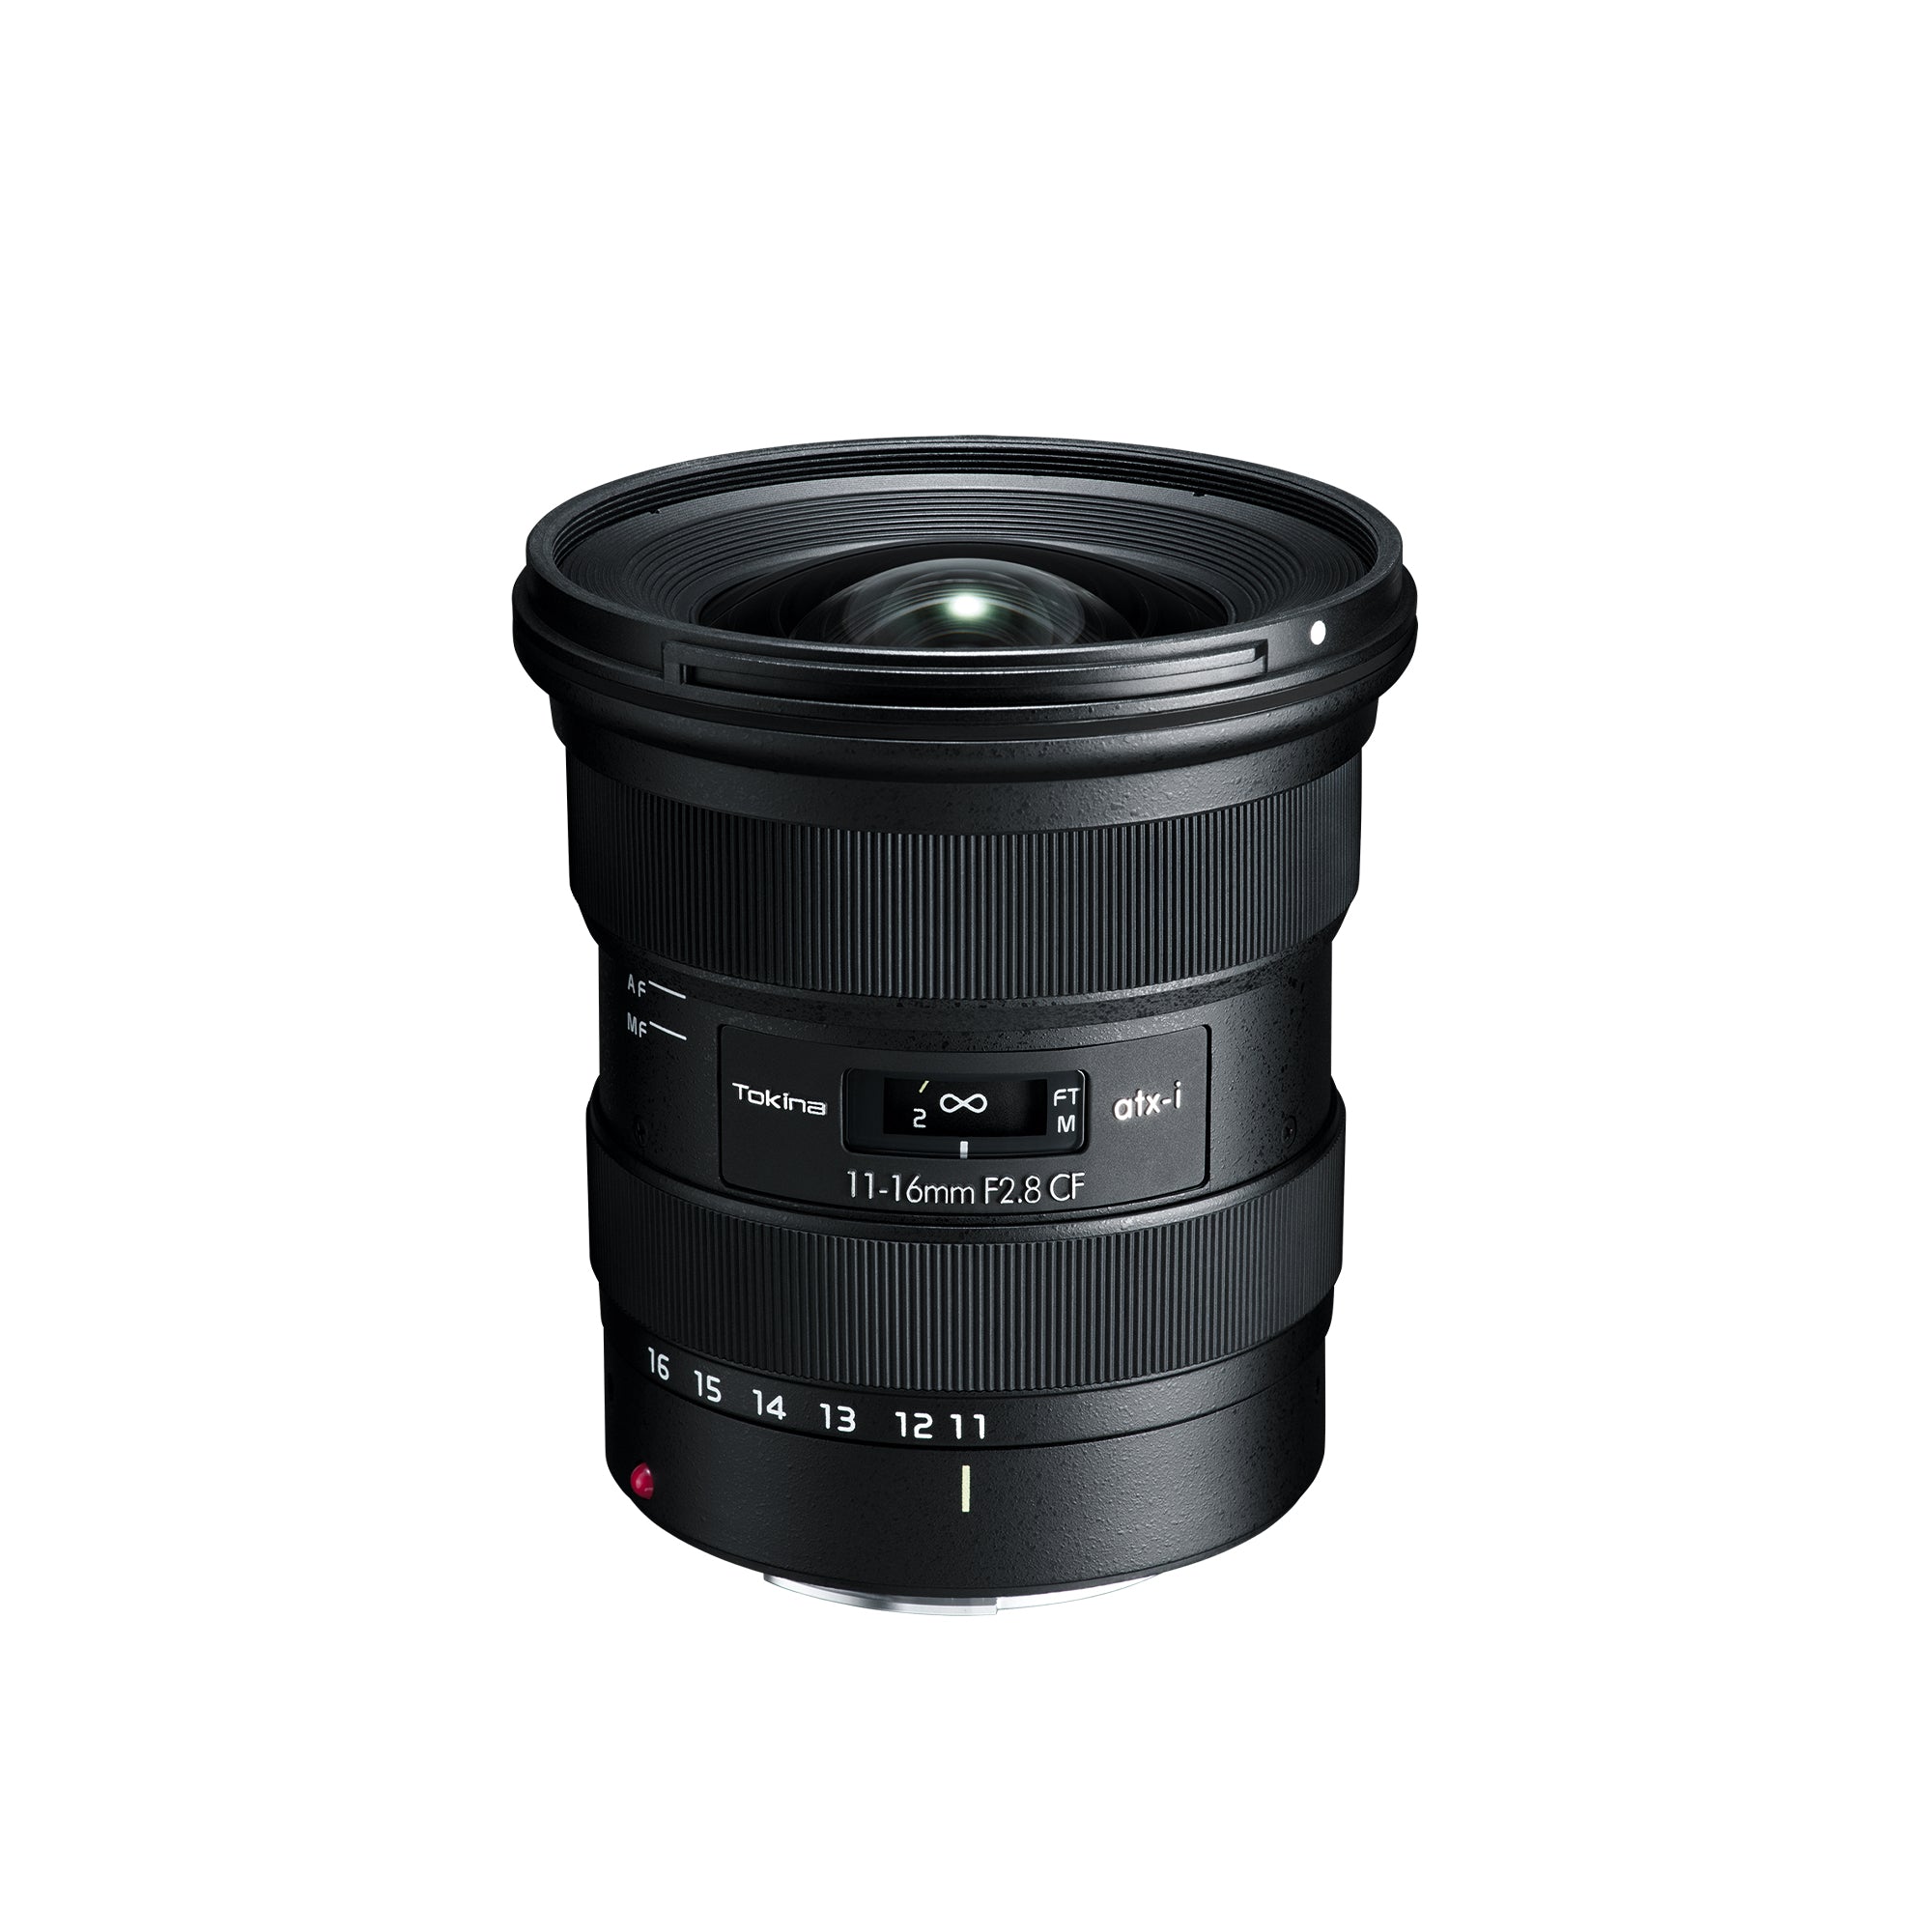 atx-i 11-16mm CF f/2.8 Canon EF Mount – Tokina Lens USA